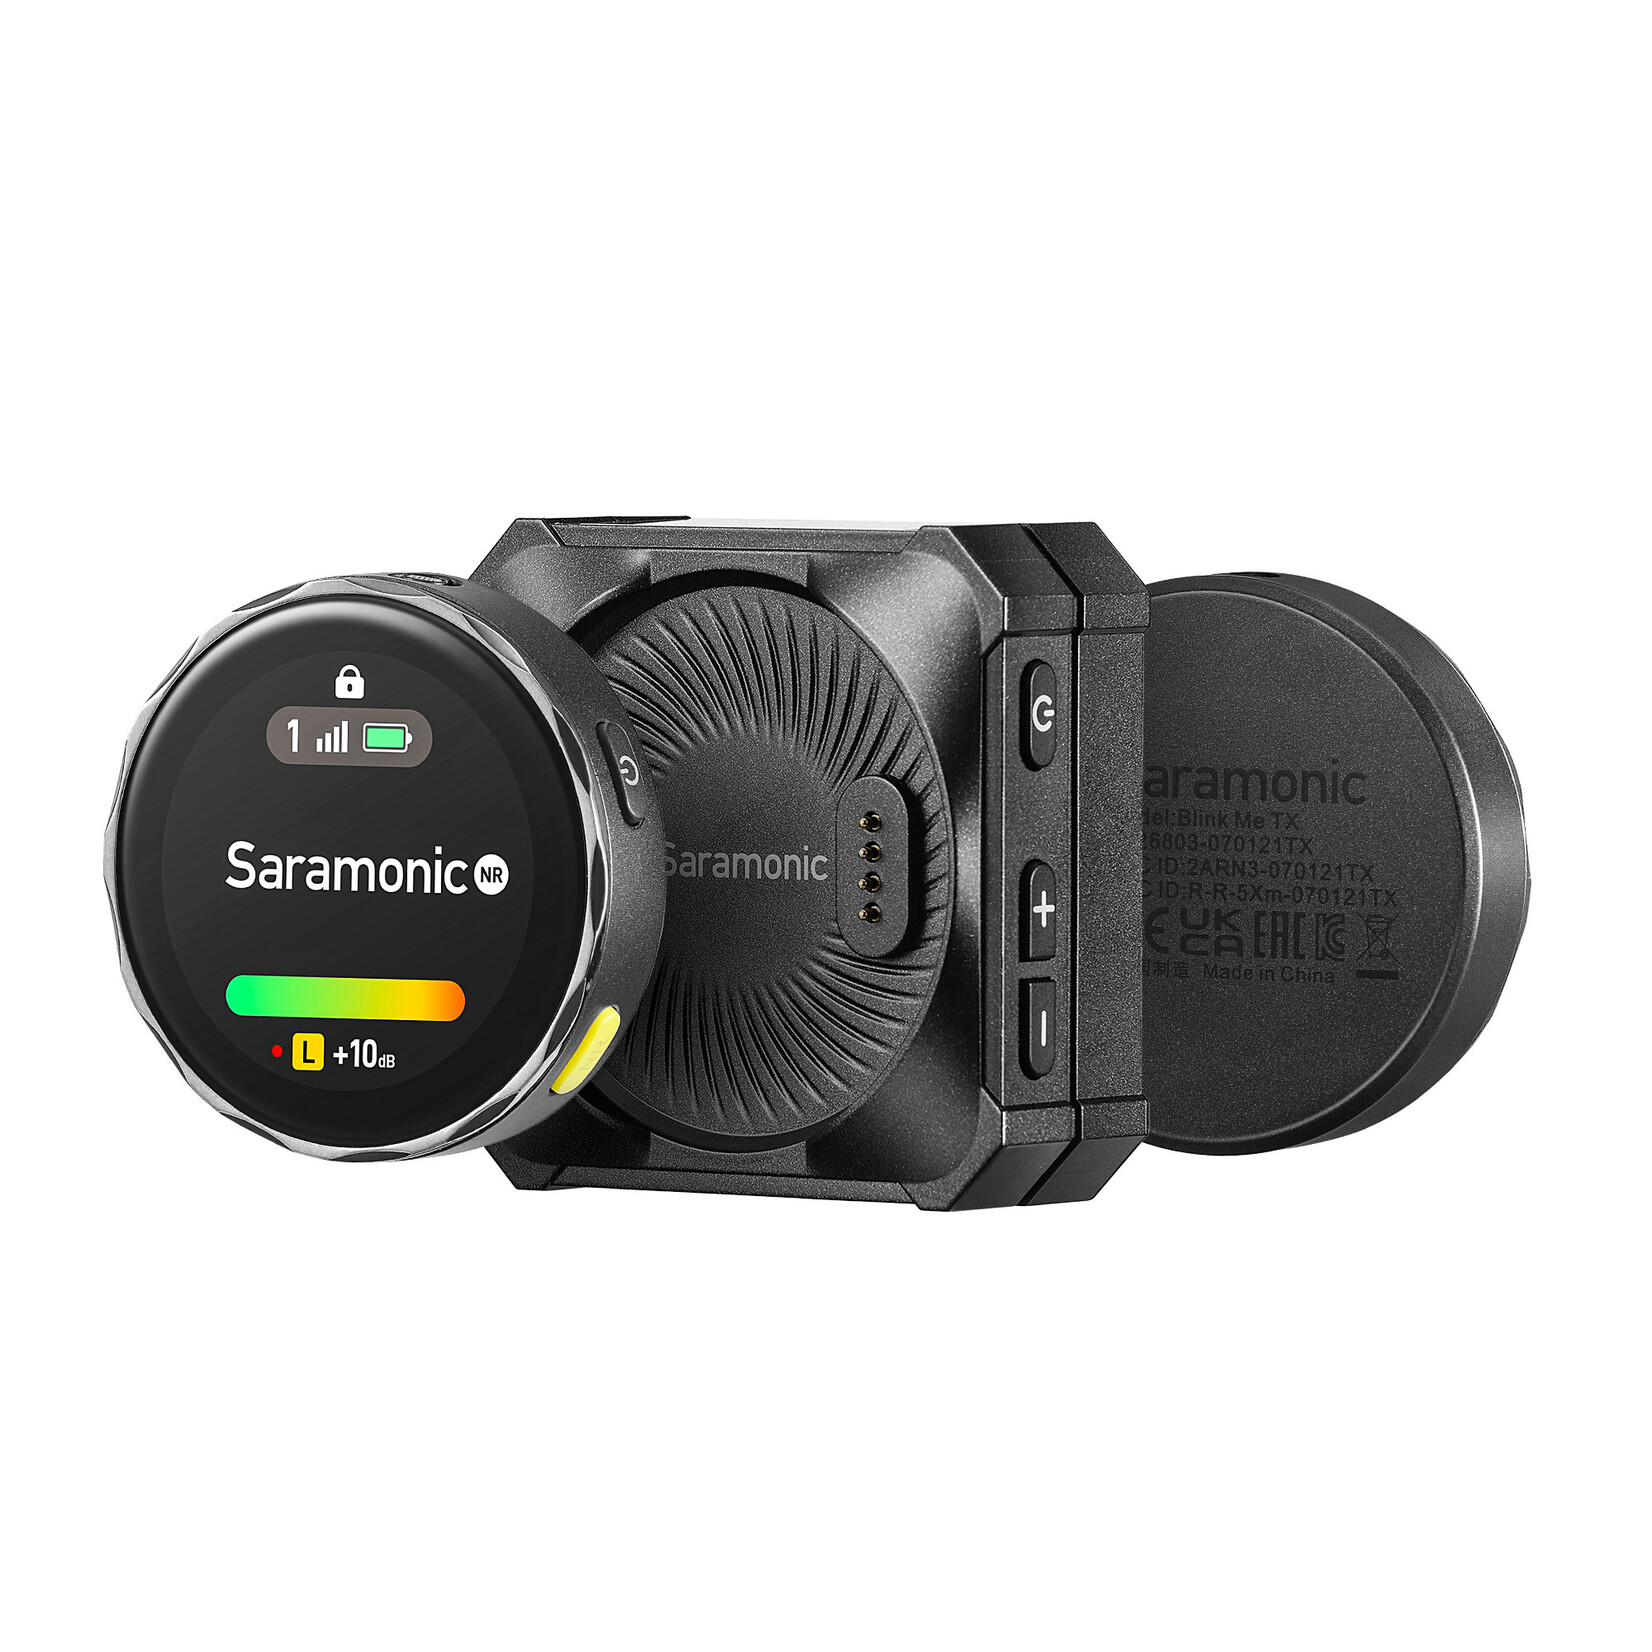 SARAMONIC Saramonic Blink Me B2 2-Person Wireless Microphone System